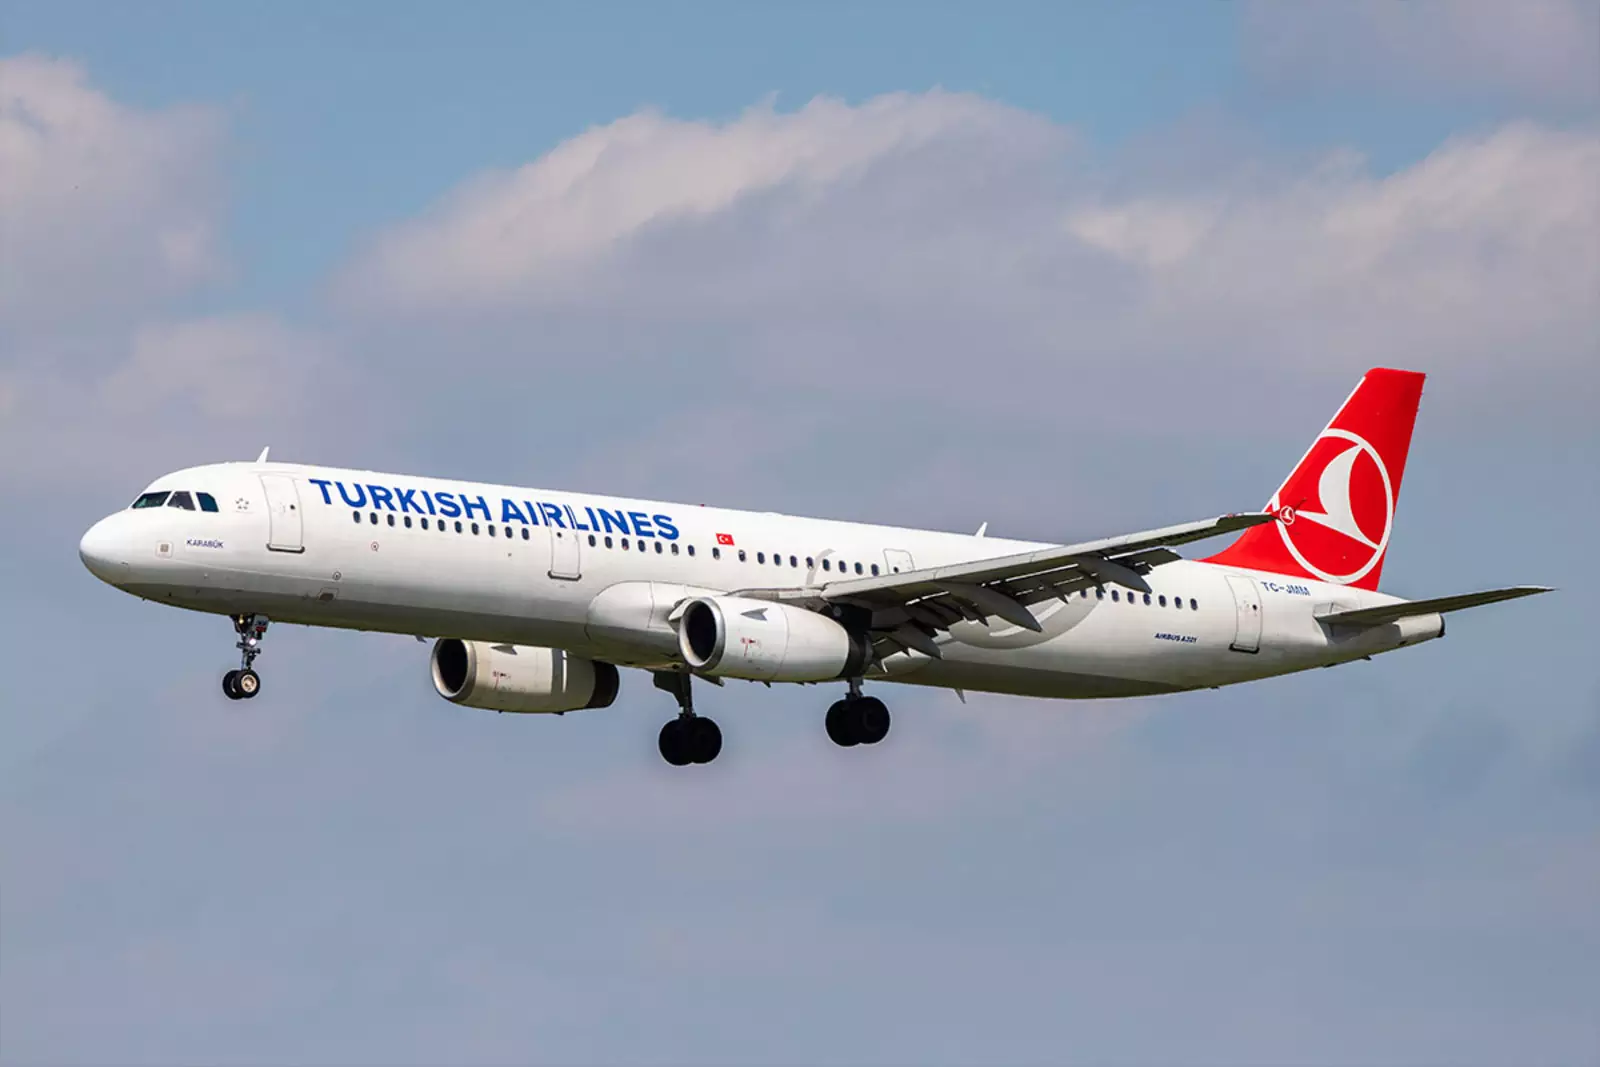  Авиакомпания "Turkish Airlines"